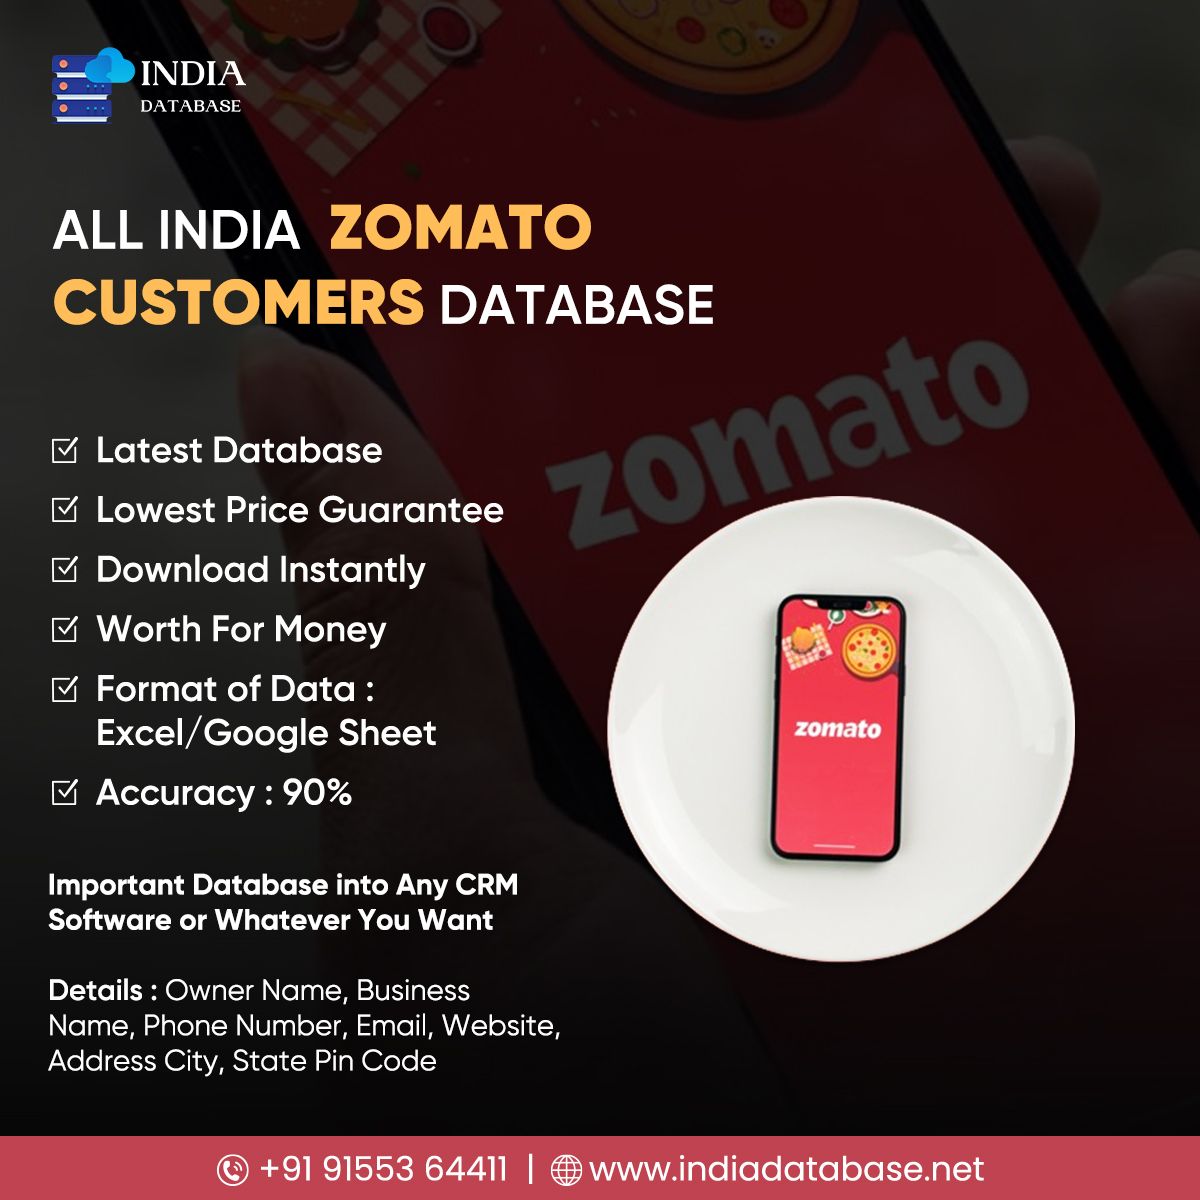 All India Zomato Customers Database